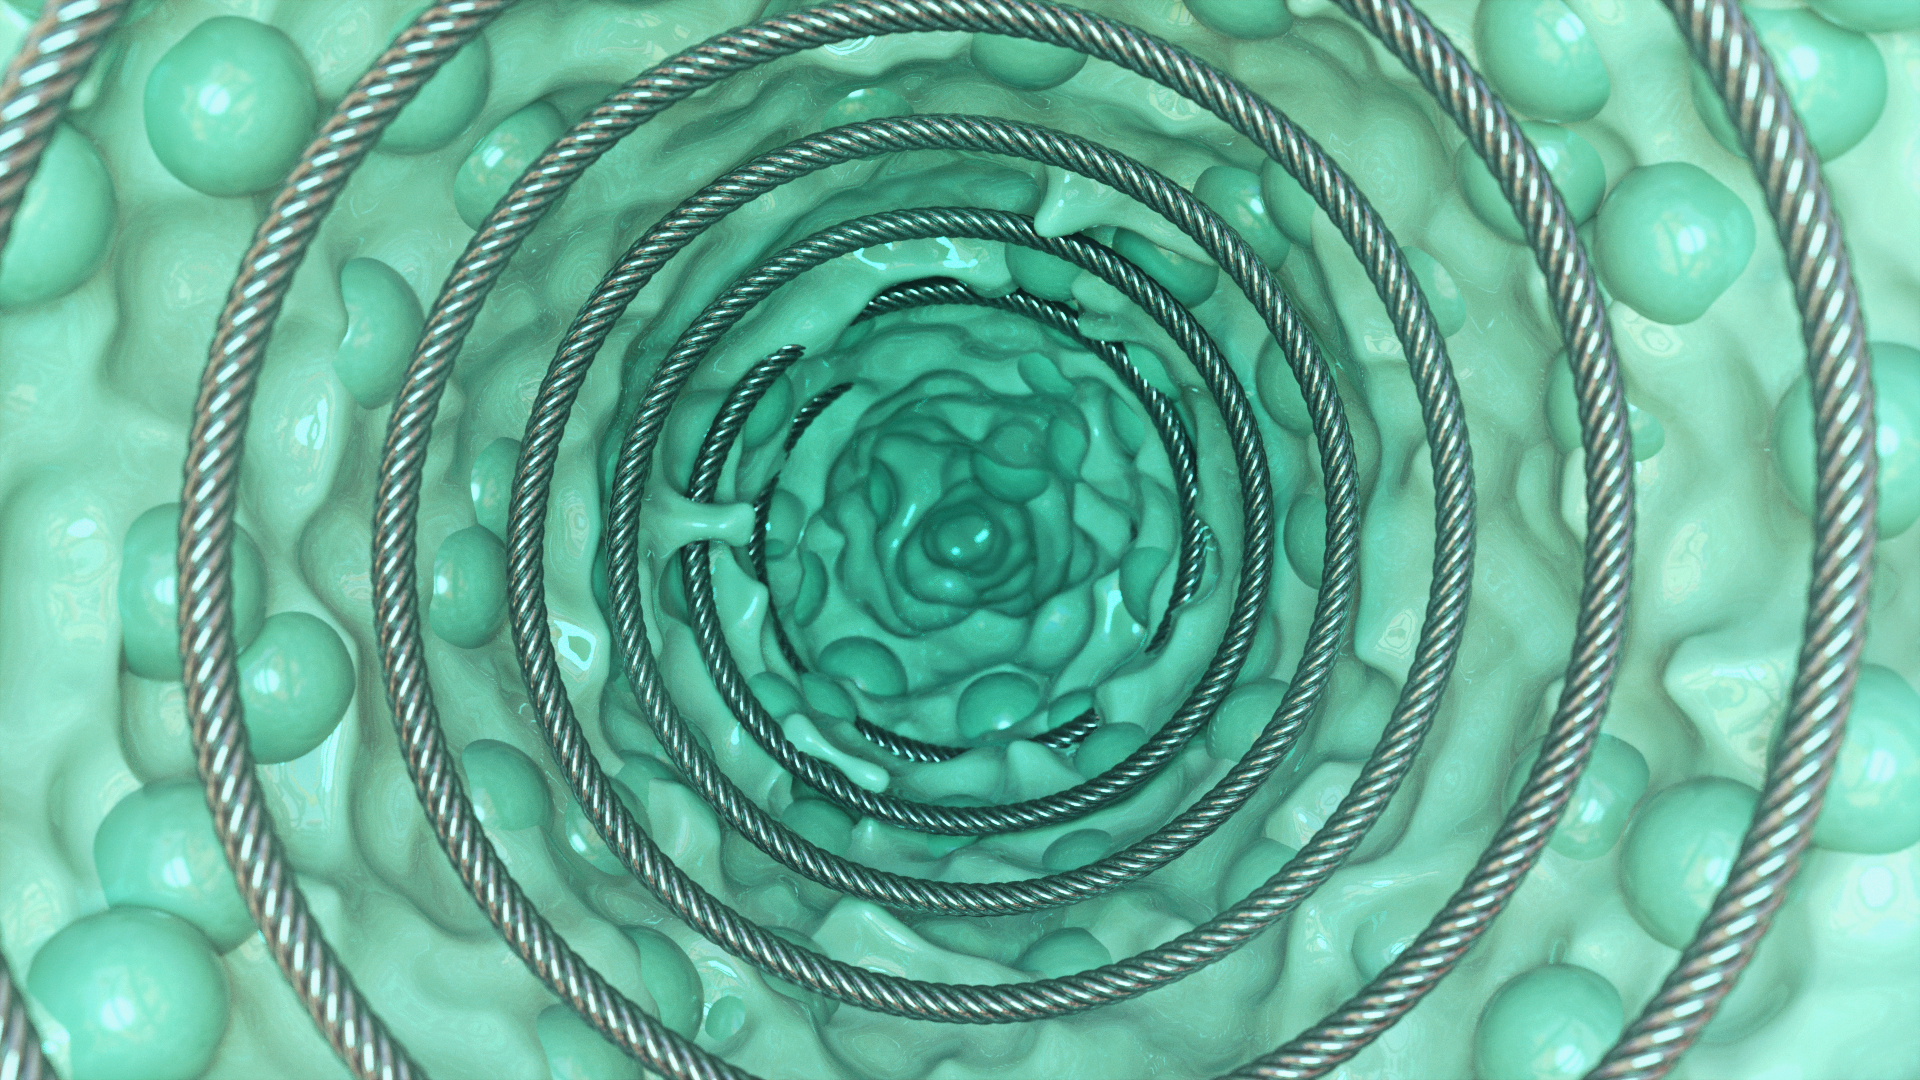 Mint Liquid 3D Fractal Fractal Ropes Abstract Twist Vortex Soft Gradient Turquoise 1920x1080